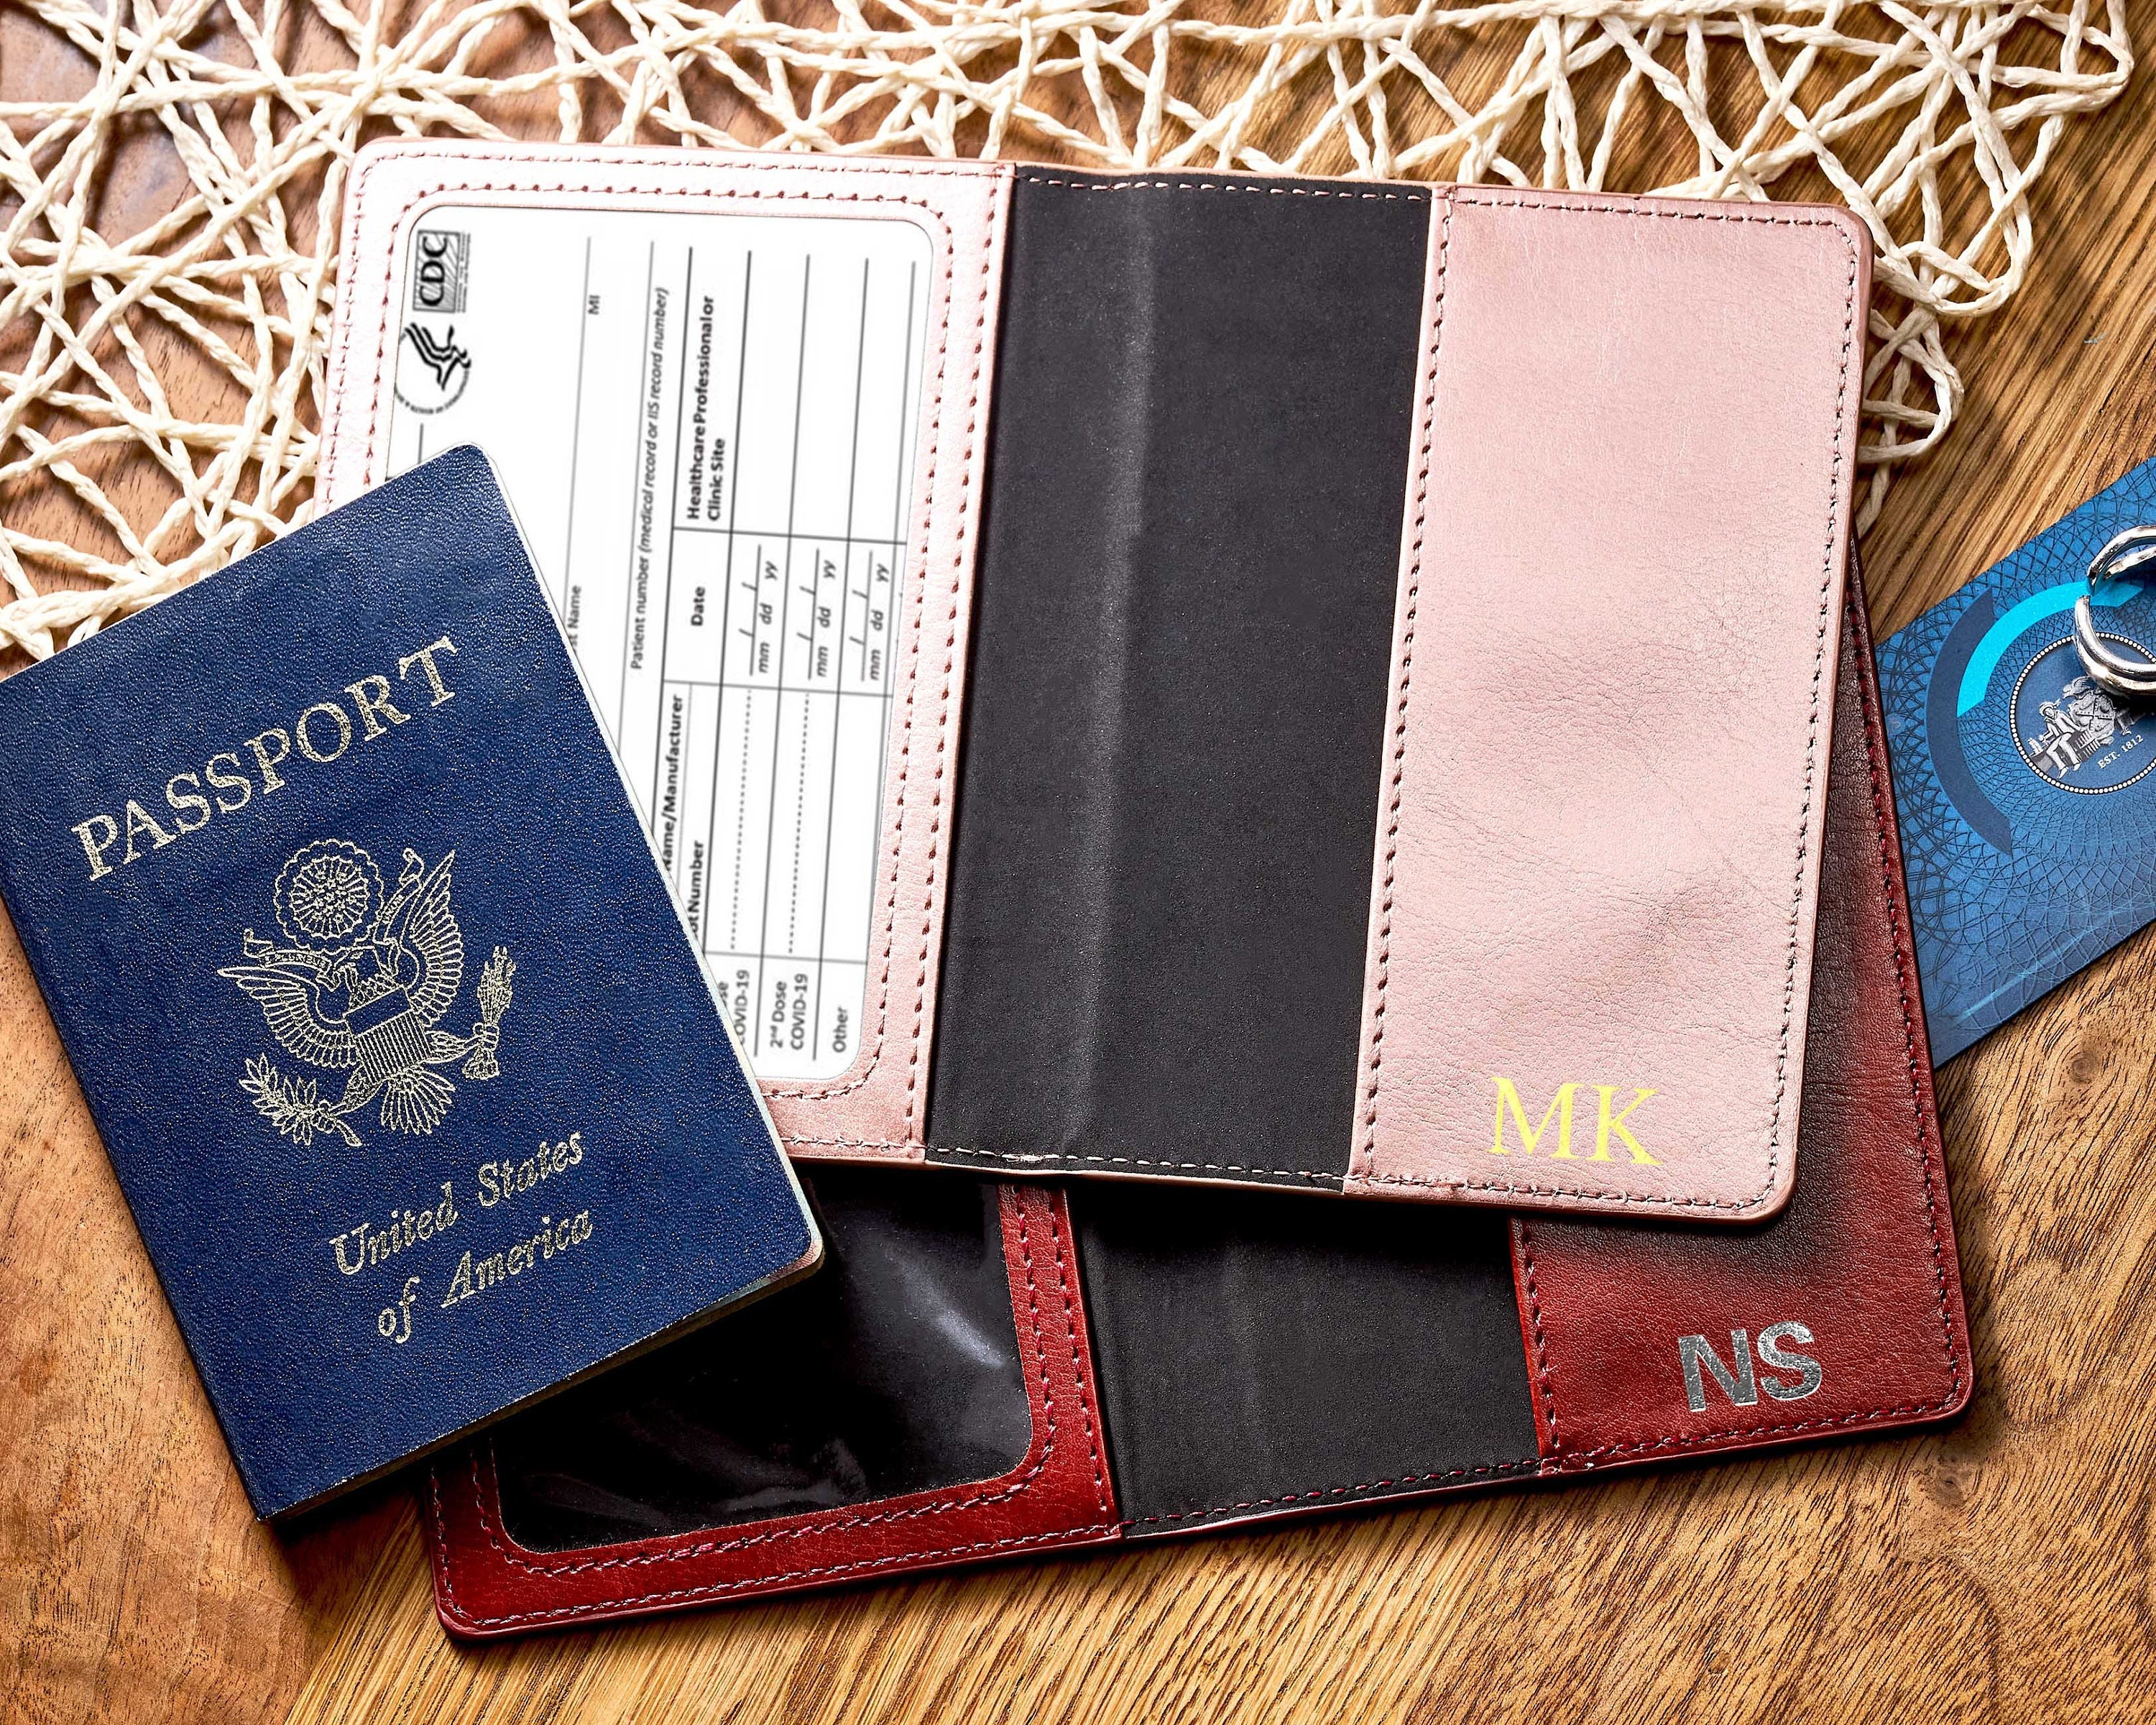 Comfitime Passport Holder RFID Blocking Passport Wallet for Cash, Travel Wallet Passport Cover with Vaccine Card Holder for Men/Women, Waterproof PU